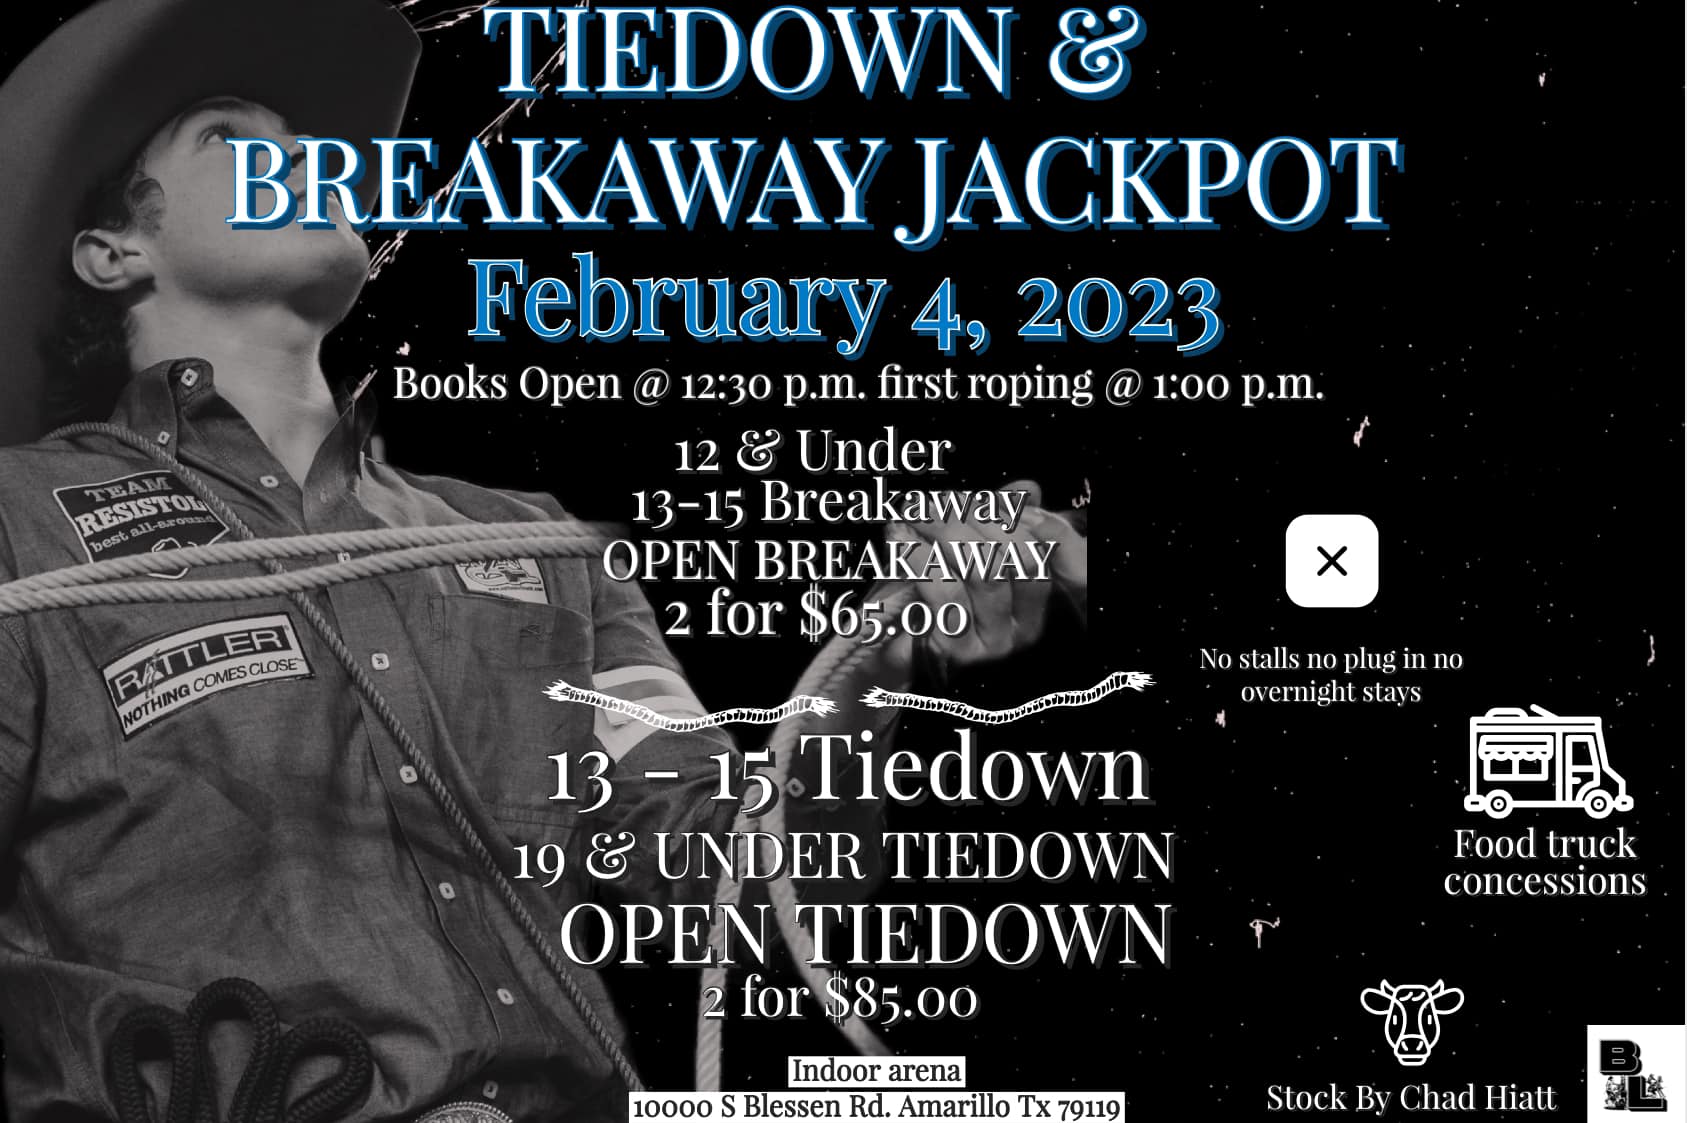 Brent Lewis Jackpot, Tei Down & Breakaway